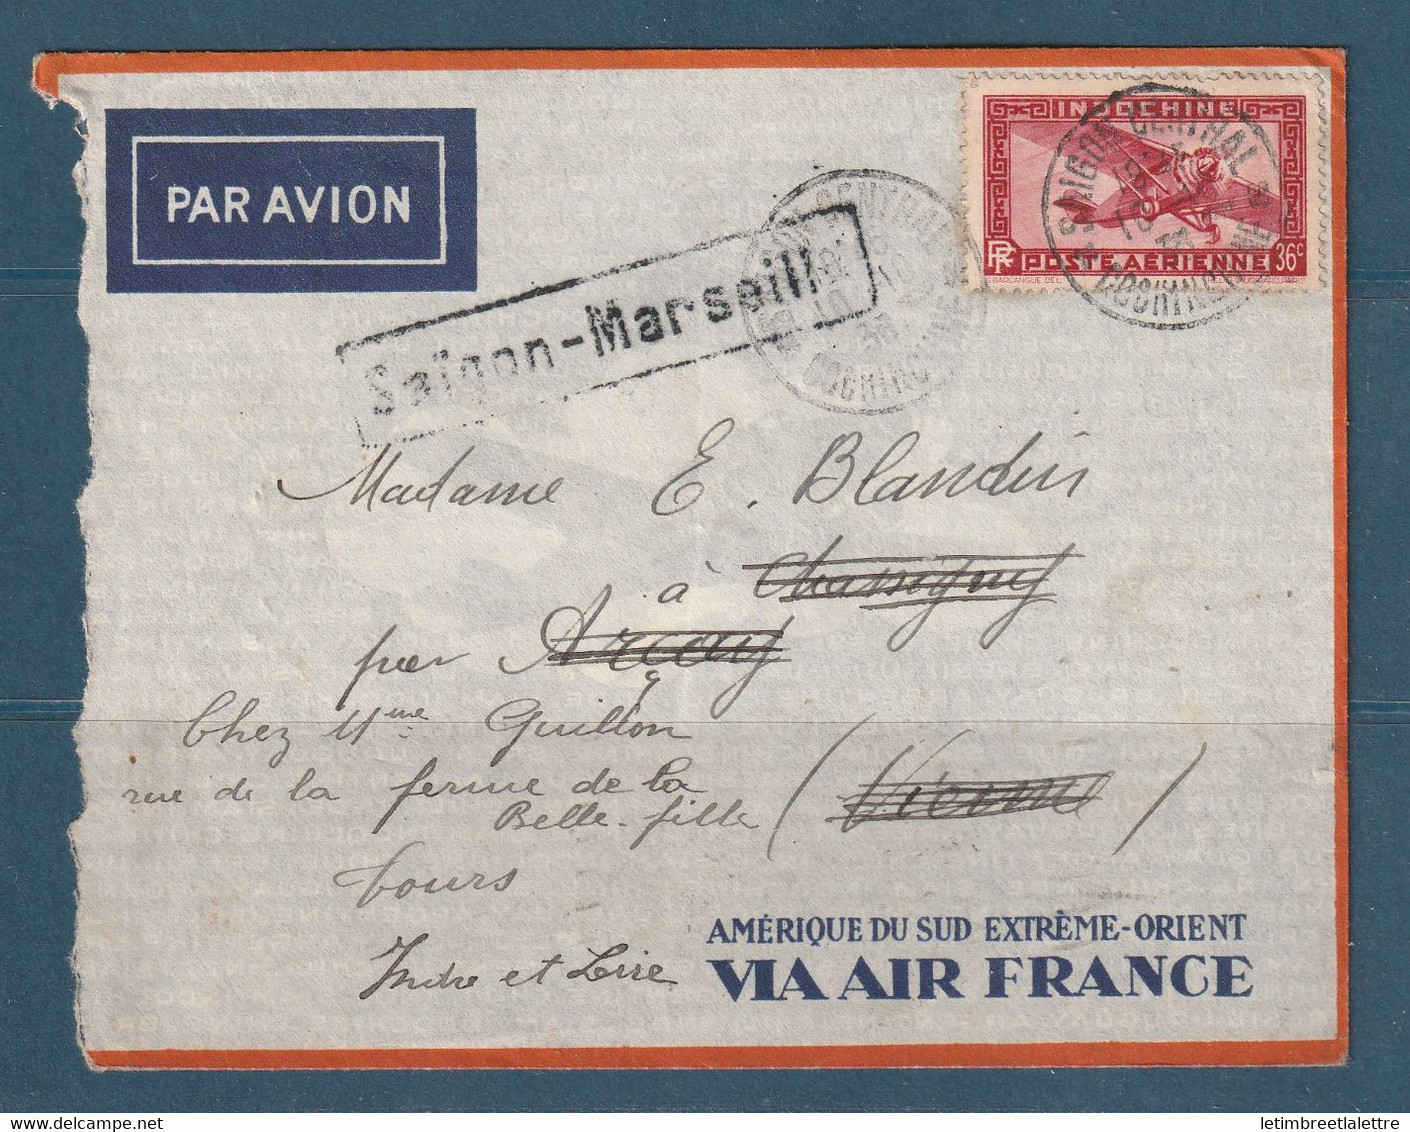 Indochine - Poste Aérienne - YT N° - Saigon Marseille Via Air France - 1936 - Poste Aérienne